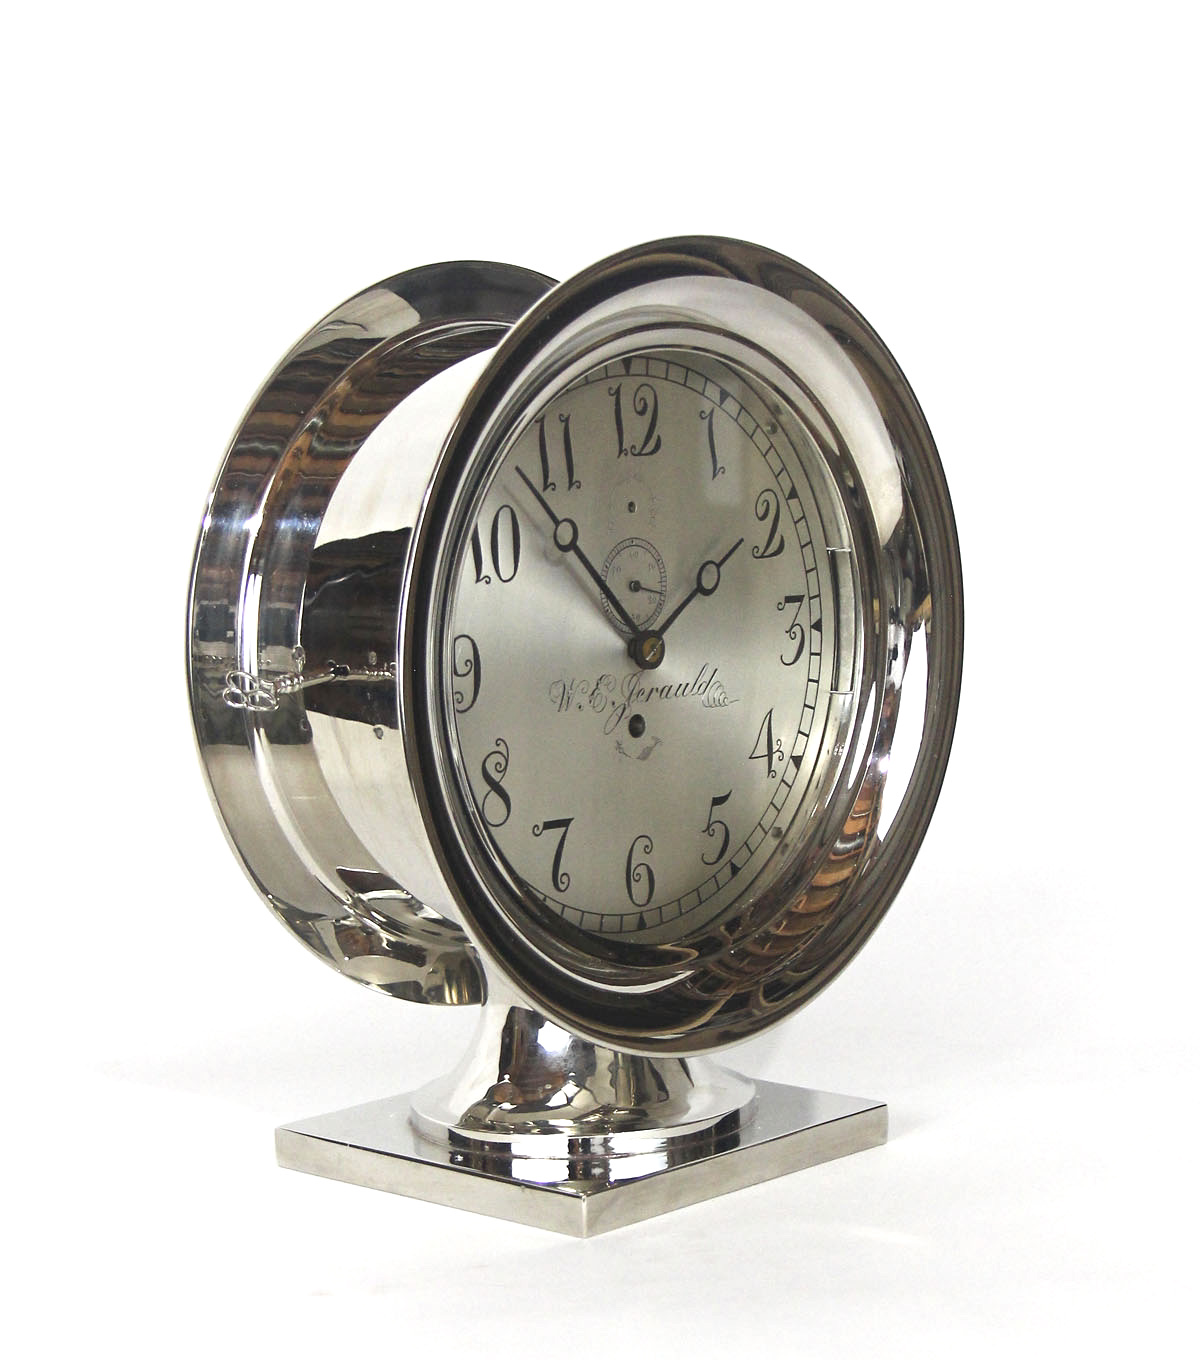 E. Howard 8 1/2" Pedestal Clock for American Steam Gauge Co. and W E Jerauld